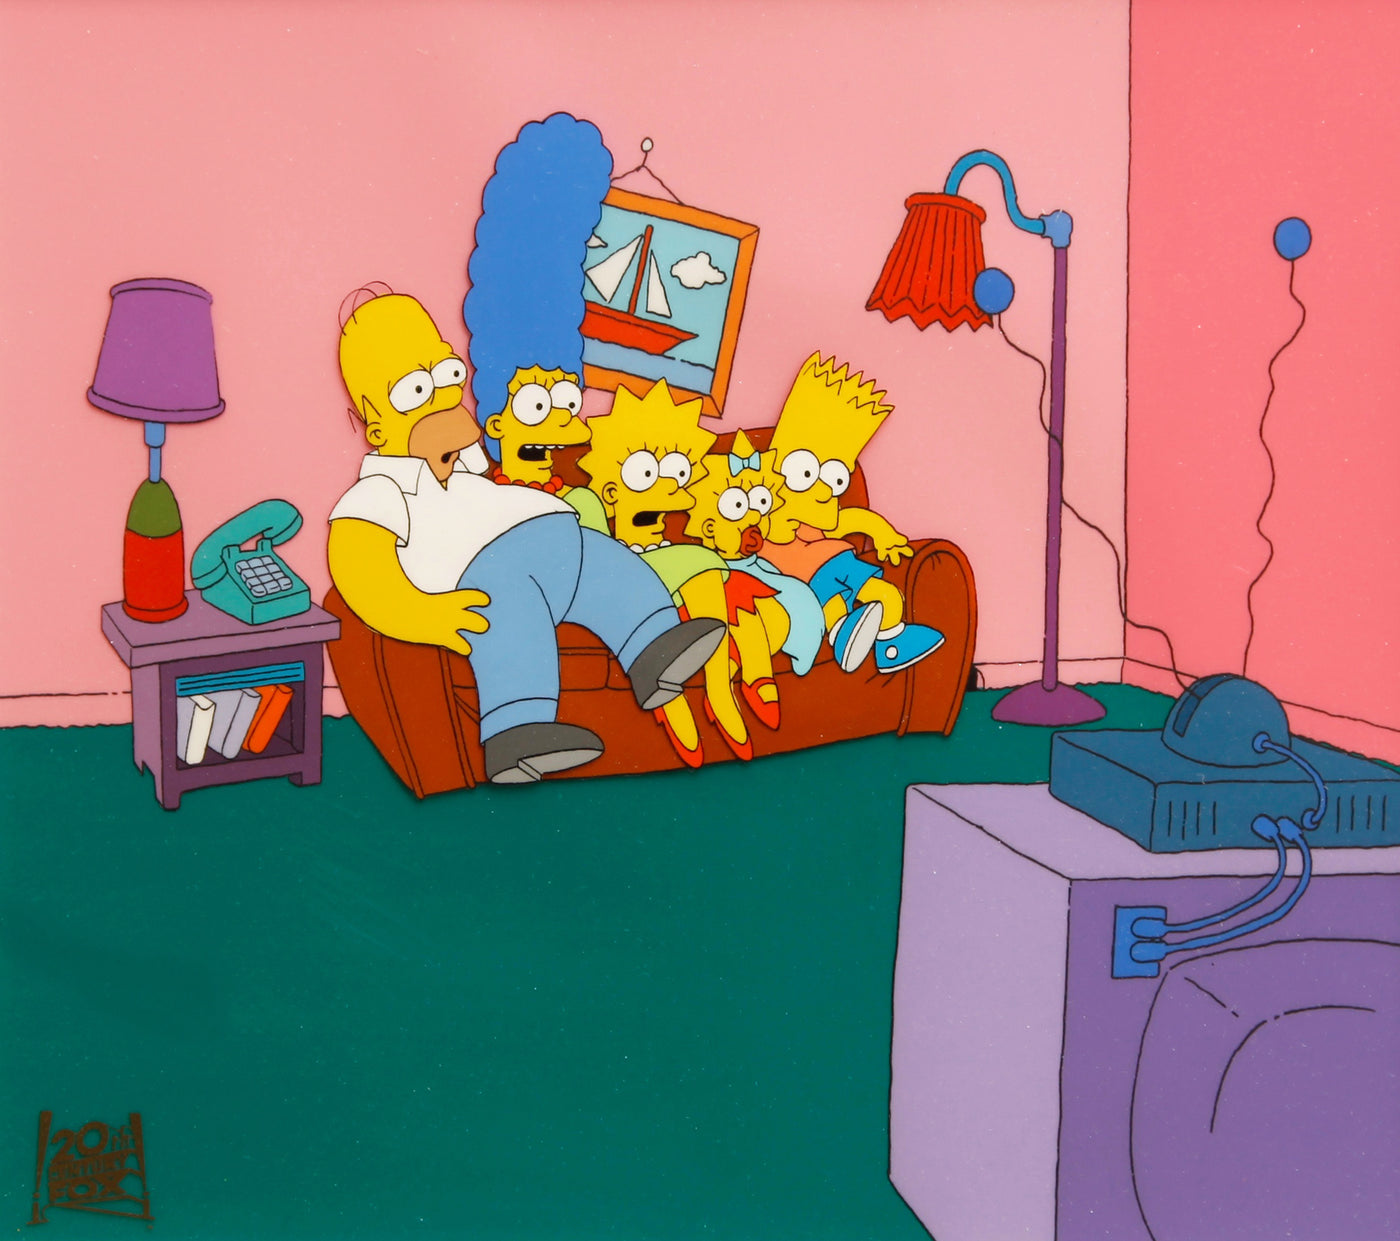 Original Simpsons Production Cel featuring the Simpsons